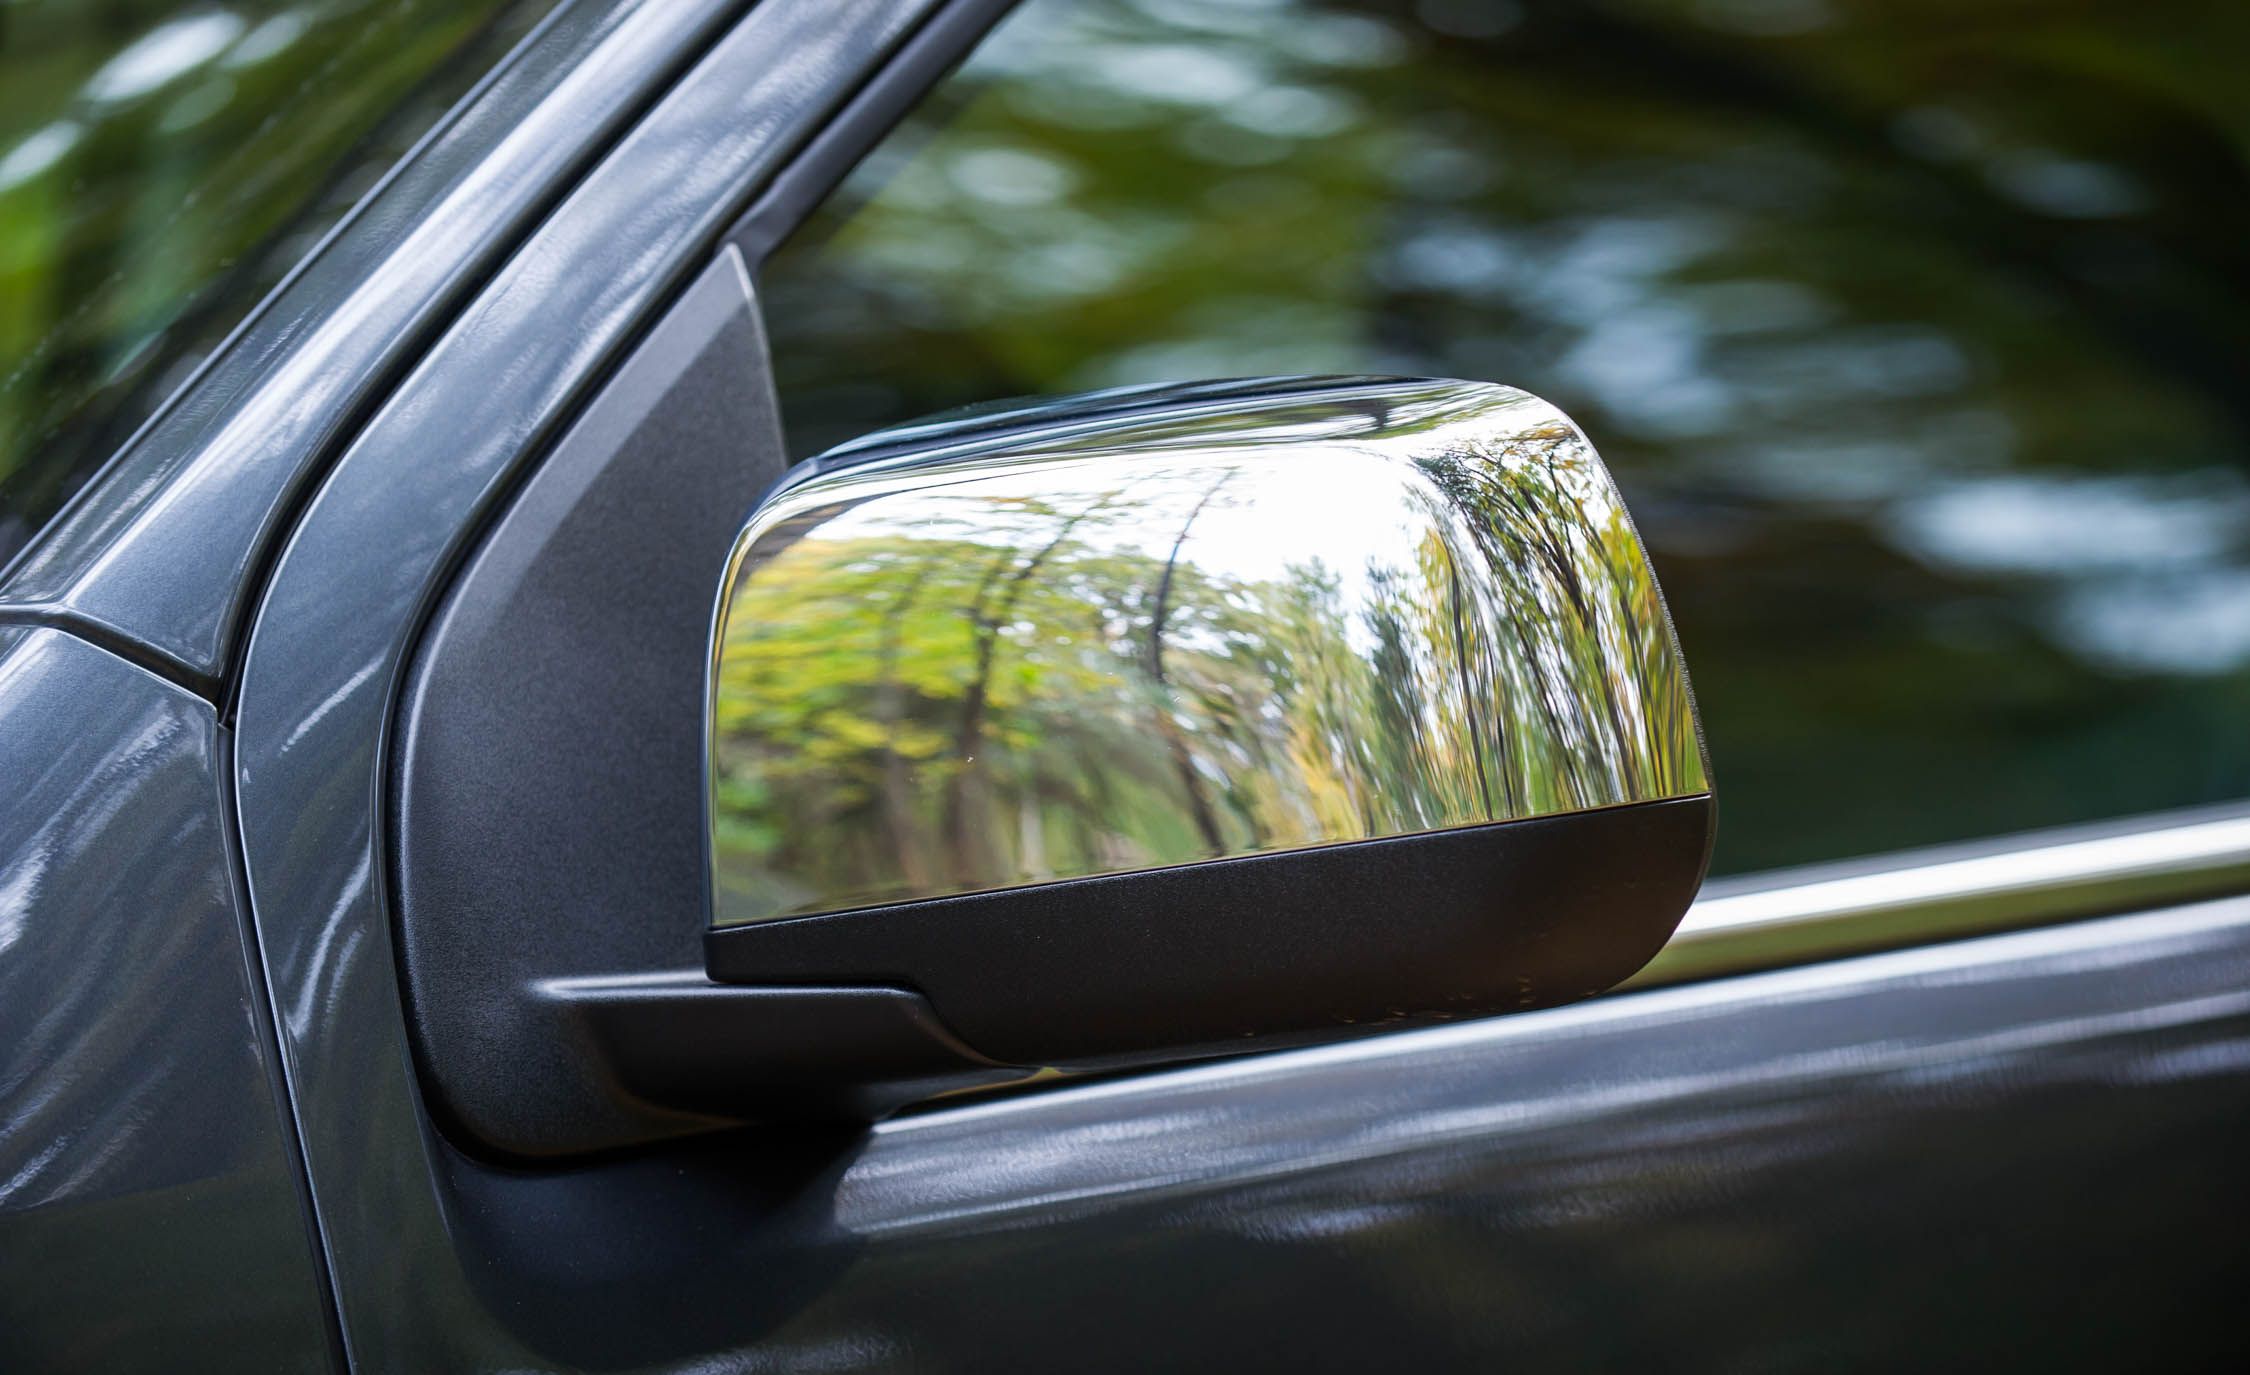 2017 Chevrolet Colorado Exterior View Side Mirror (View 33 of 41)